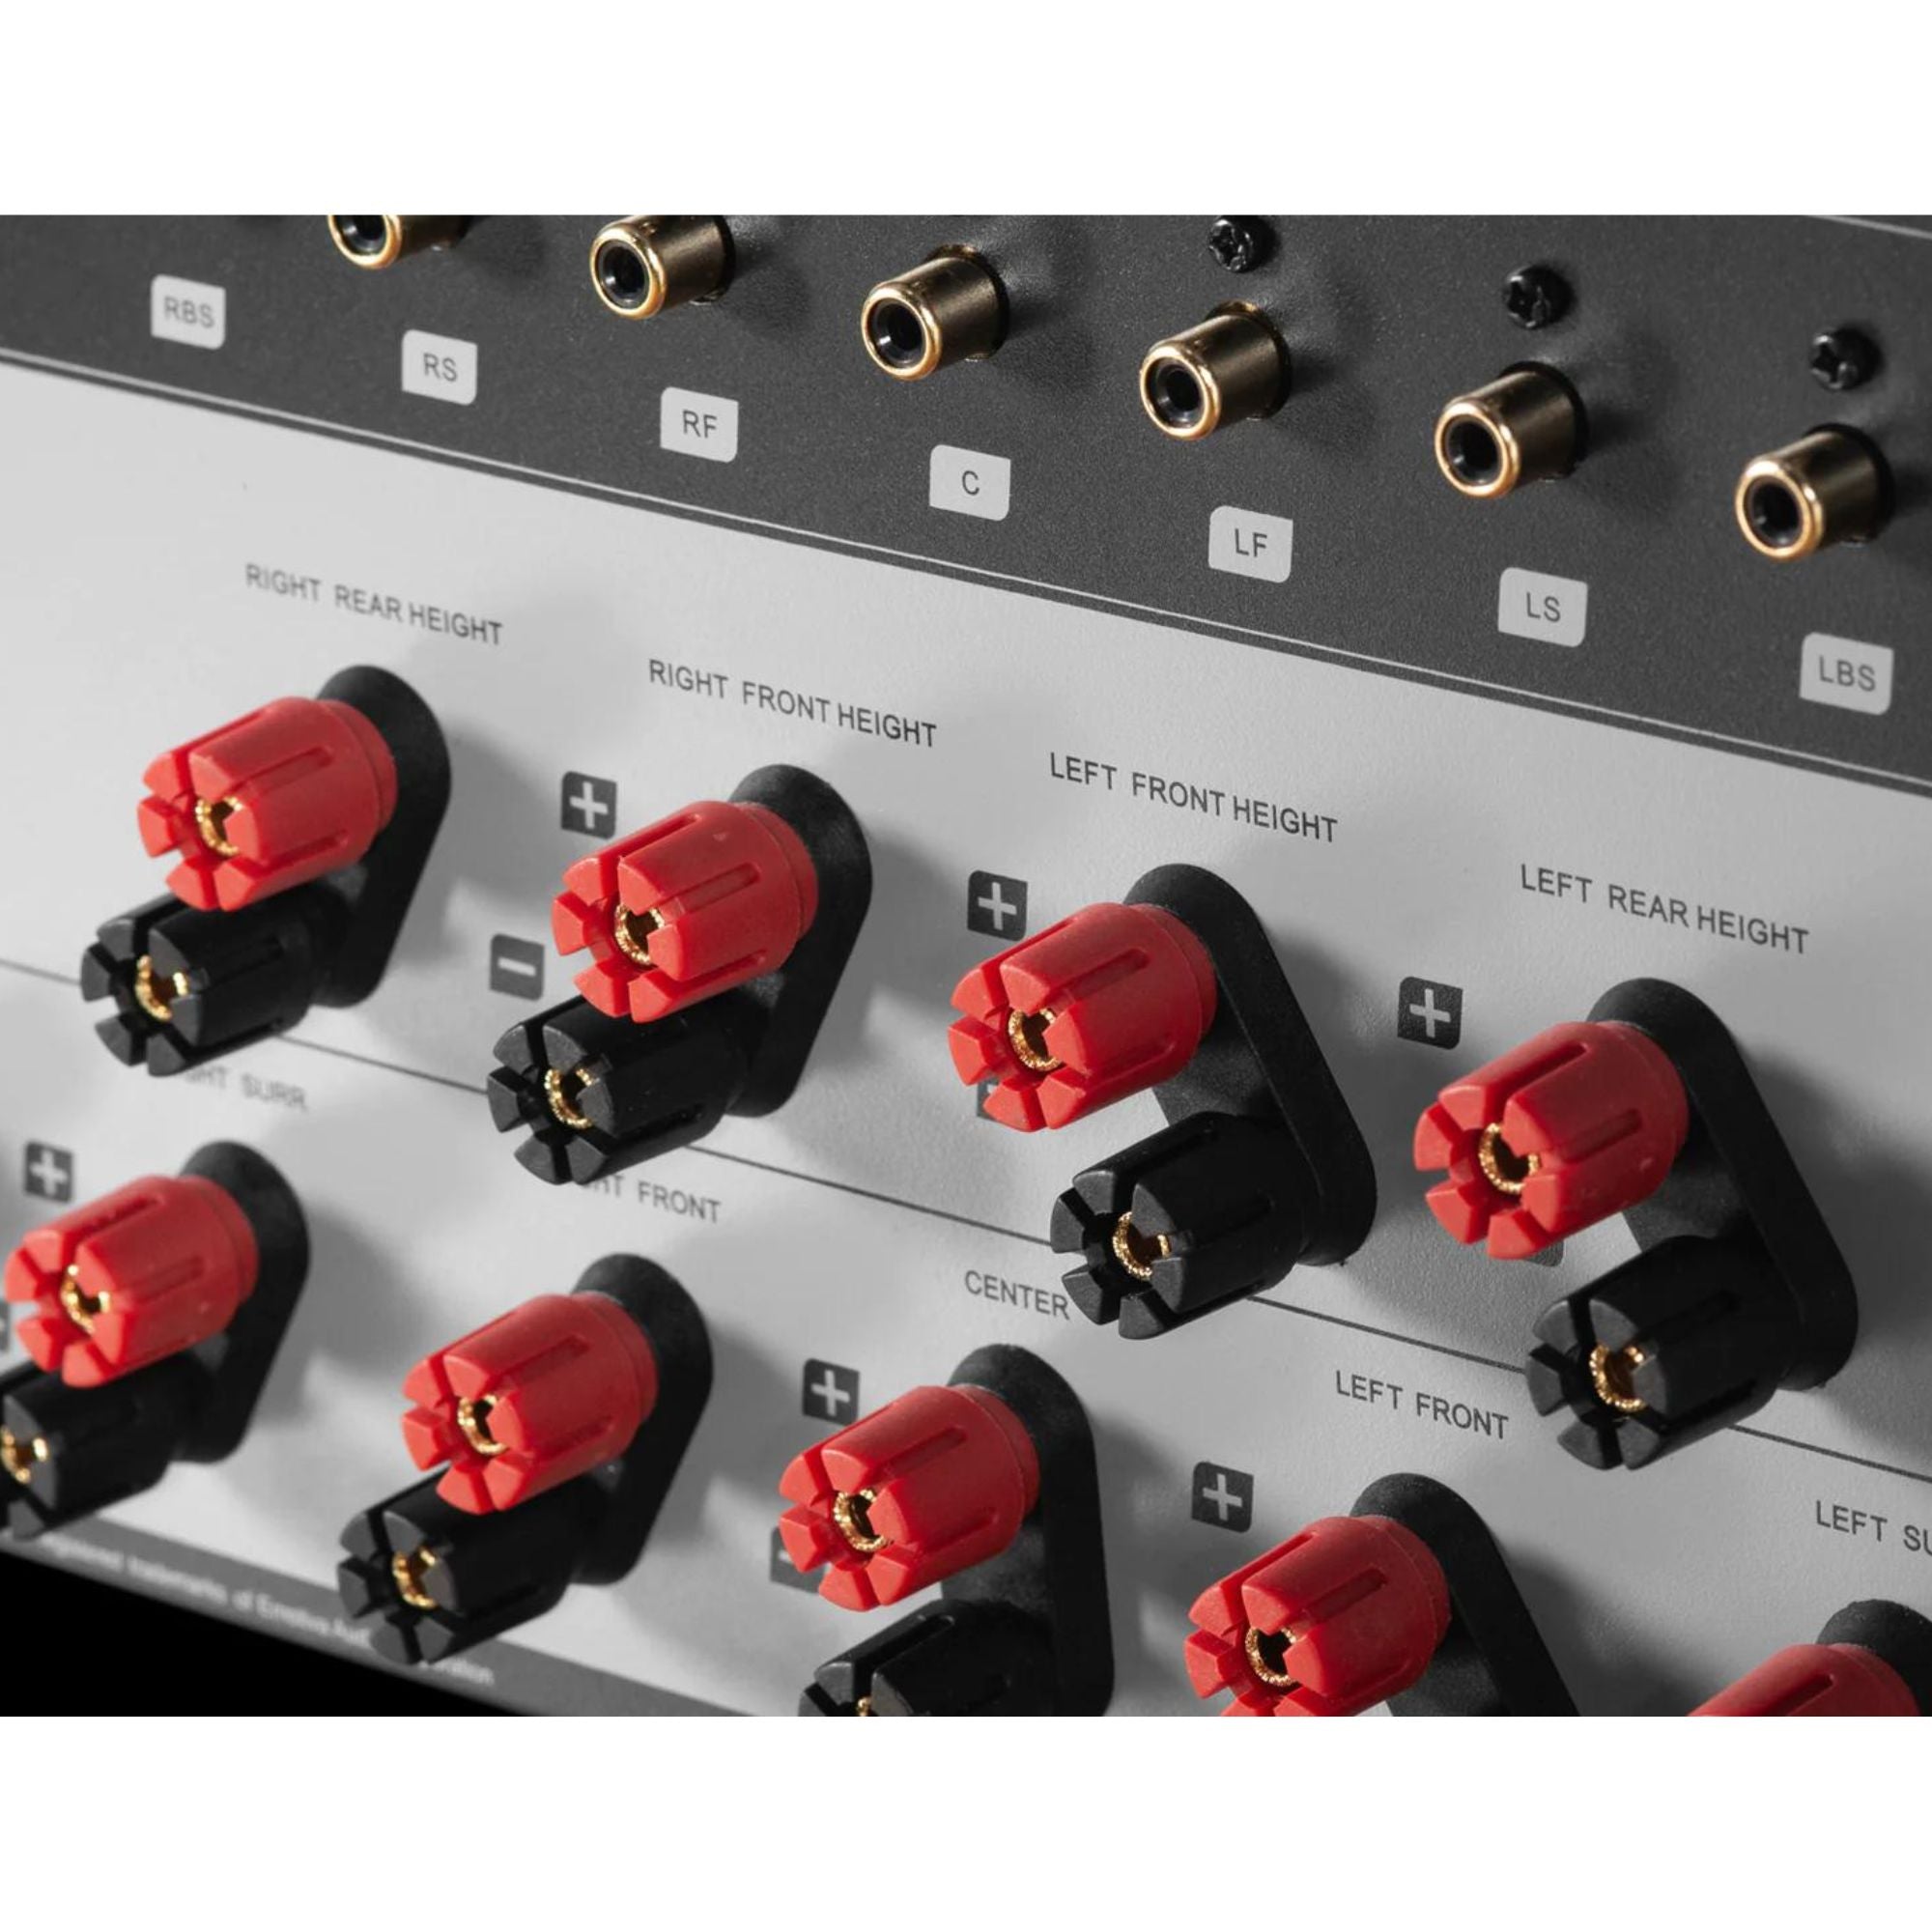 Emotiva BasX A11 - Power Amplifier, Emotiva, Power Amplifier - AVStore.in